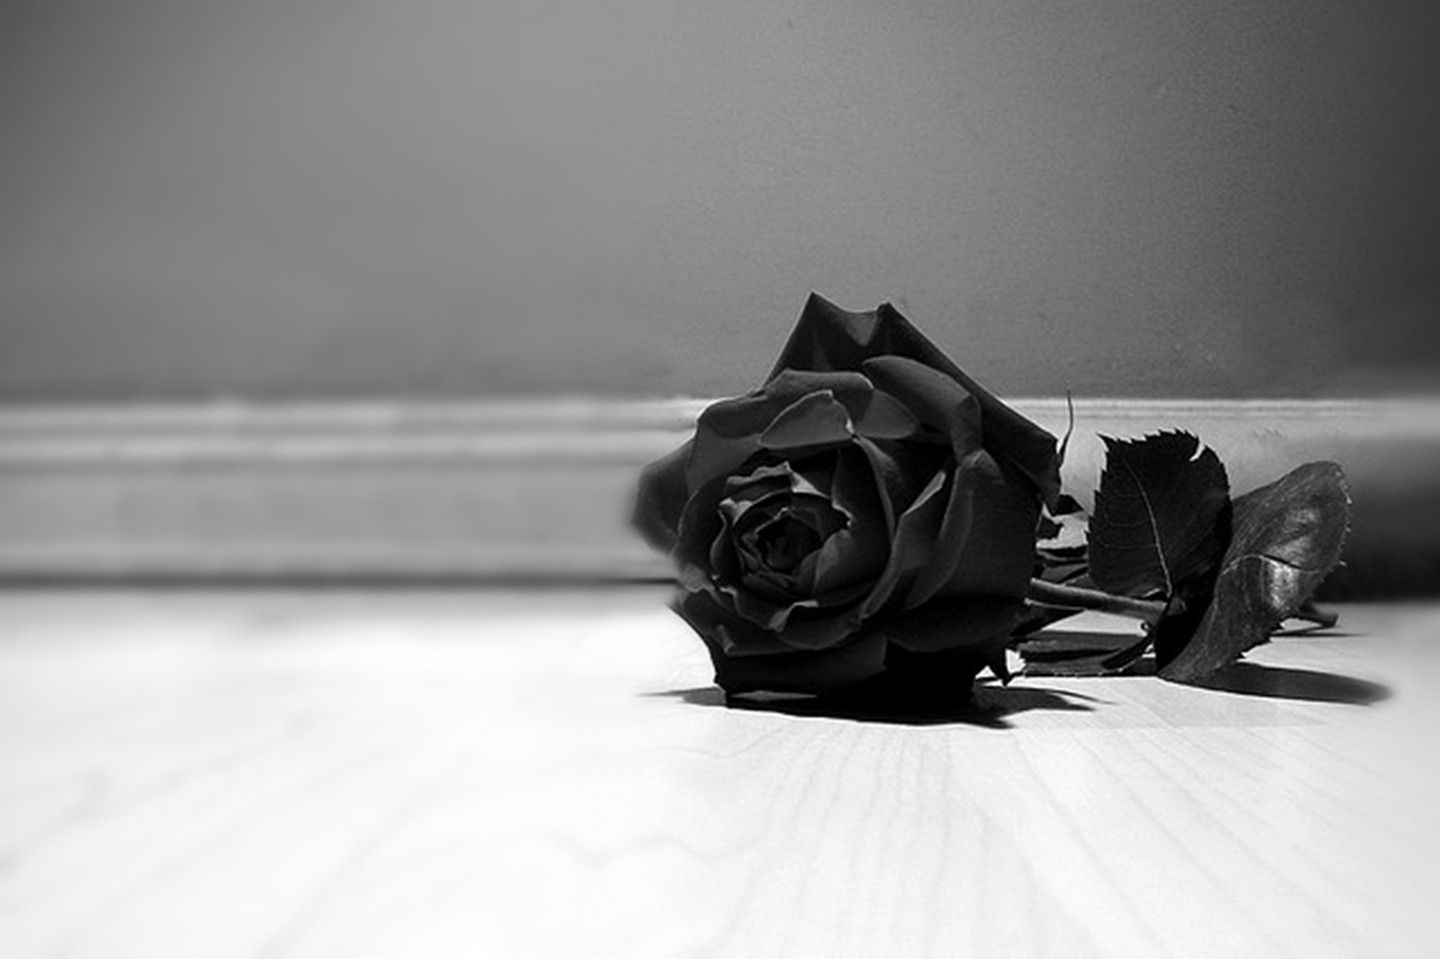 Aesthetic Black Rose Wallpaper - 1000 images about black rose trending on we heart it.